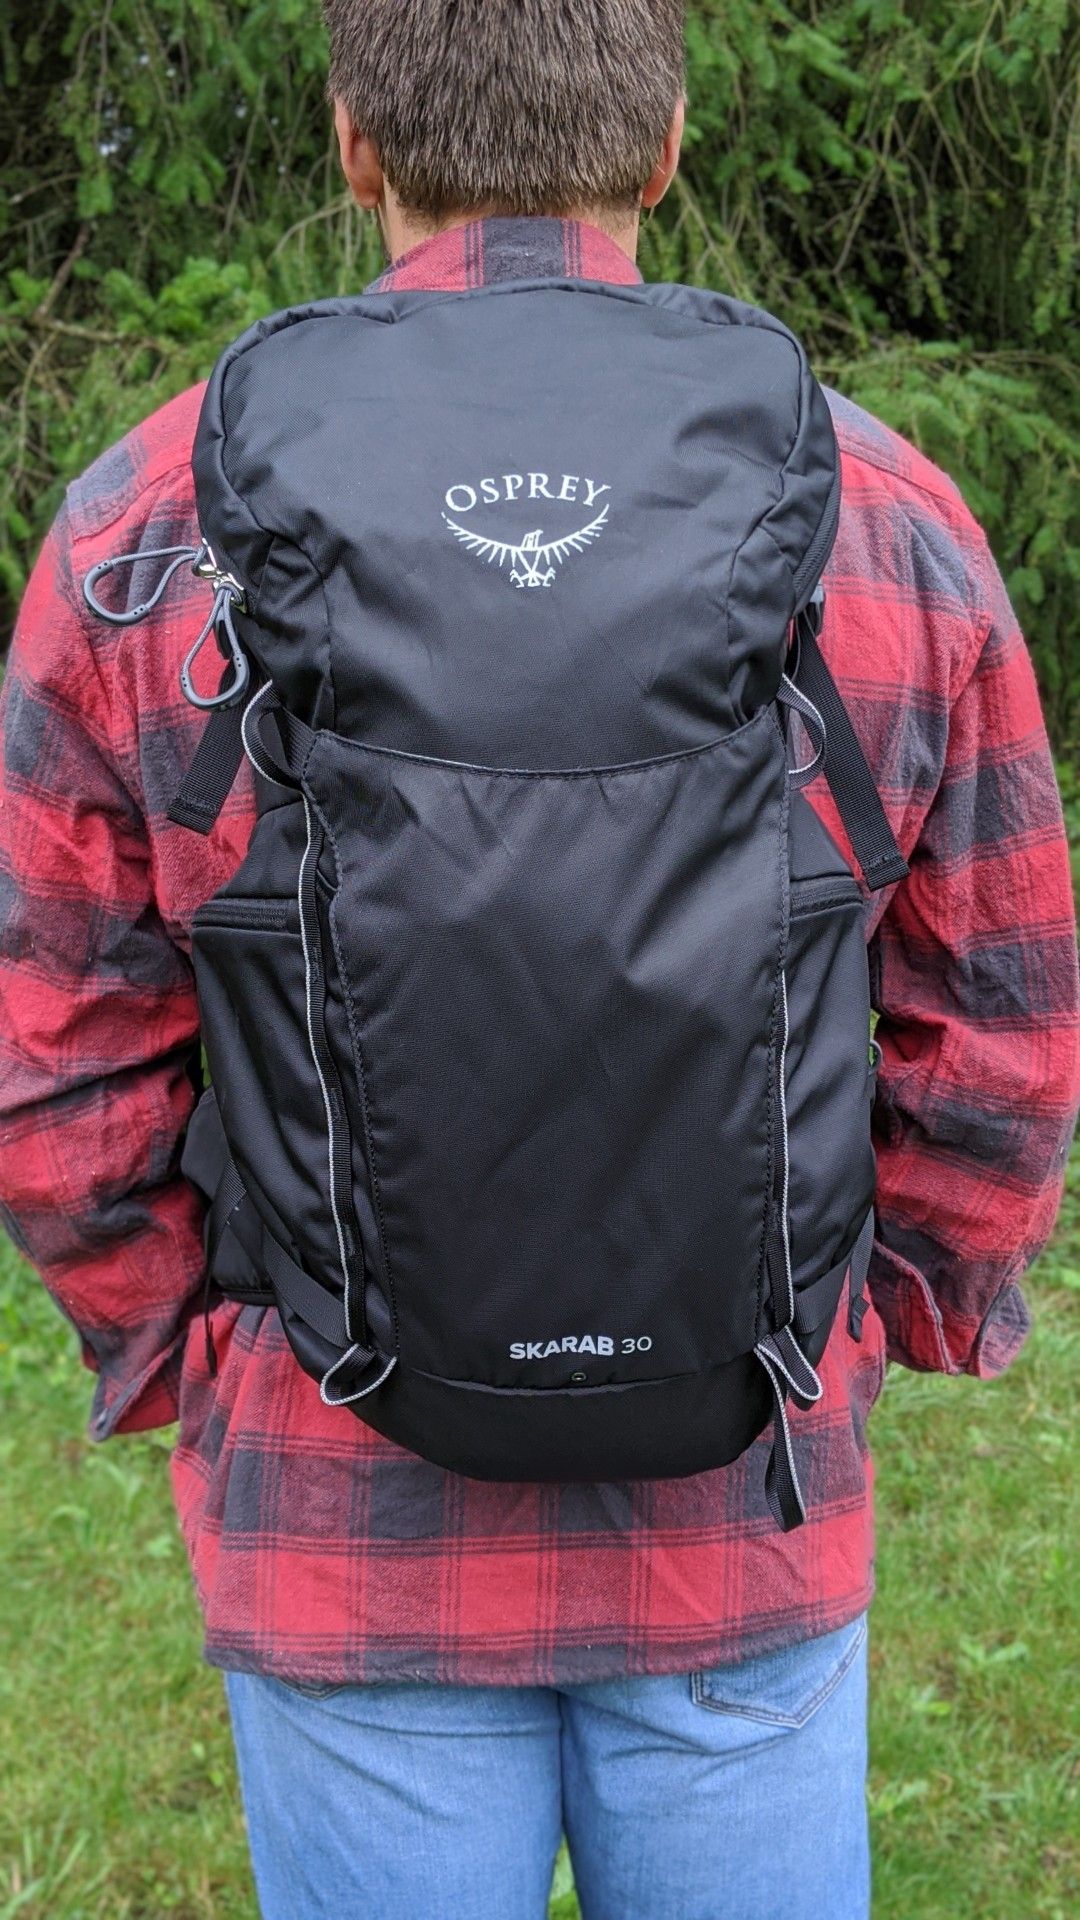 New Osprey Backpack - Skarab 30